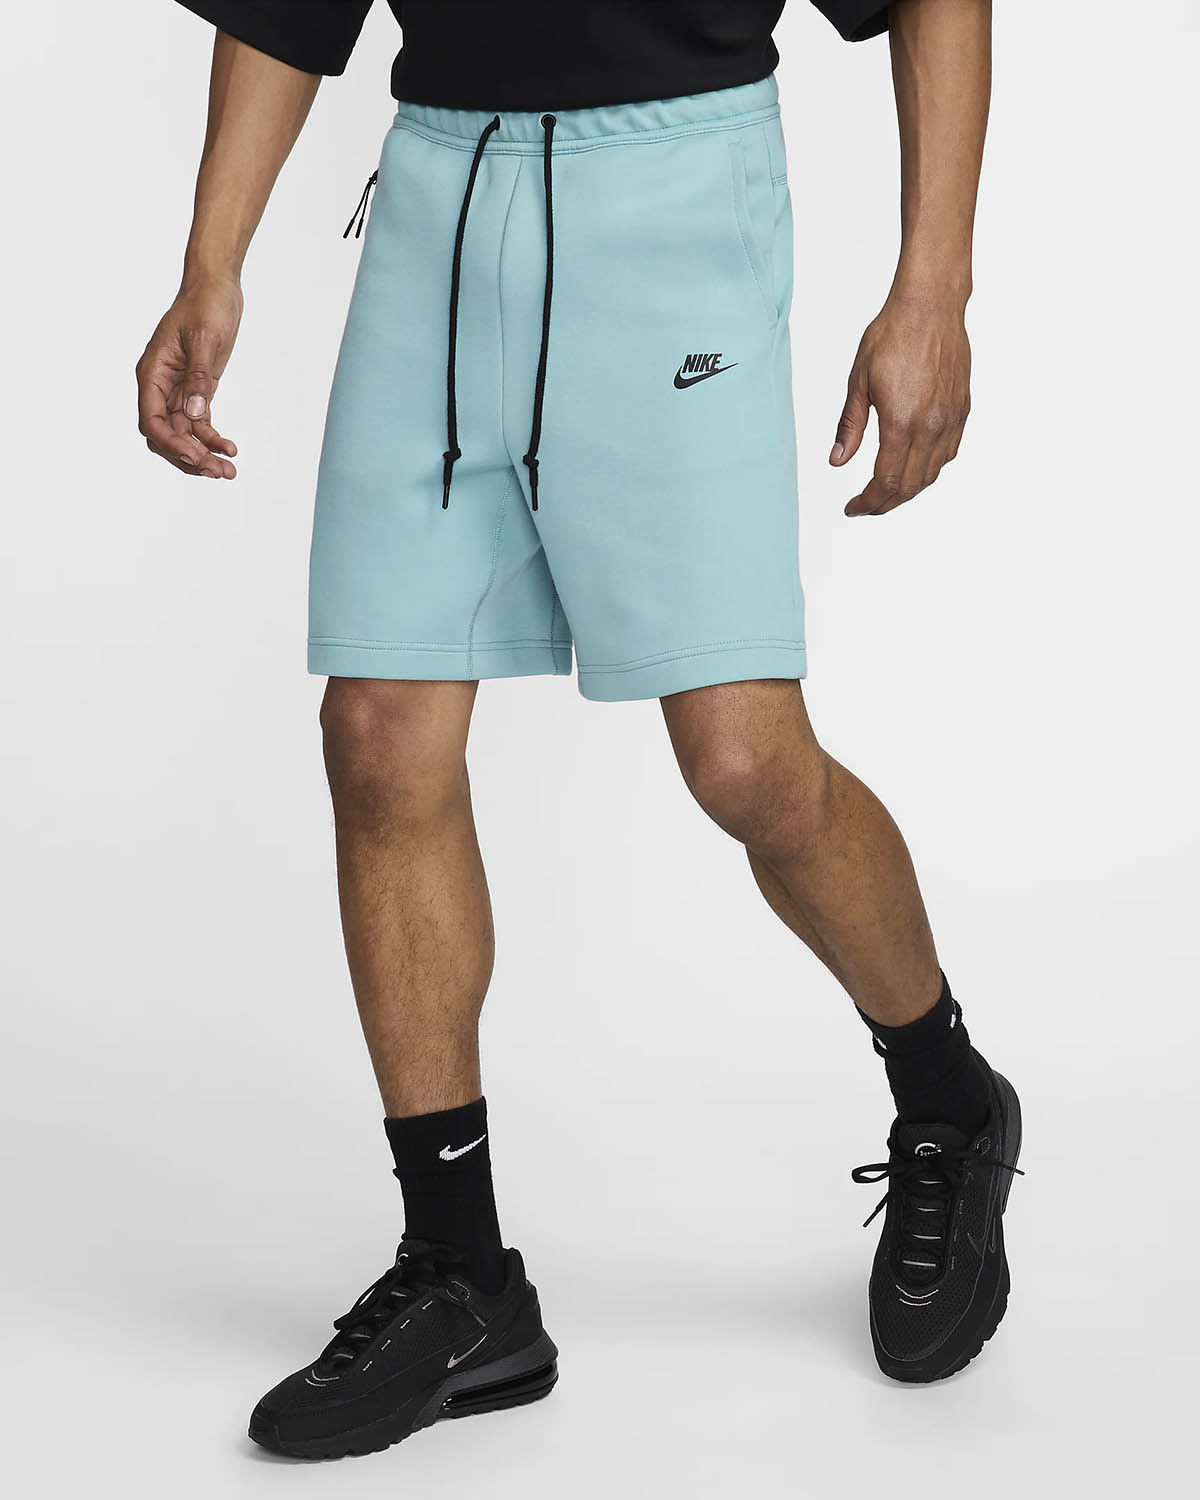 Nike Tech Fleece Shorts Denim Turquoise Black